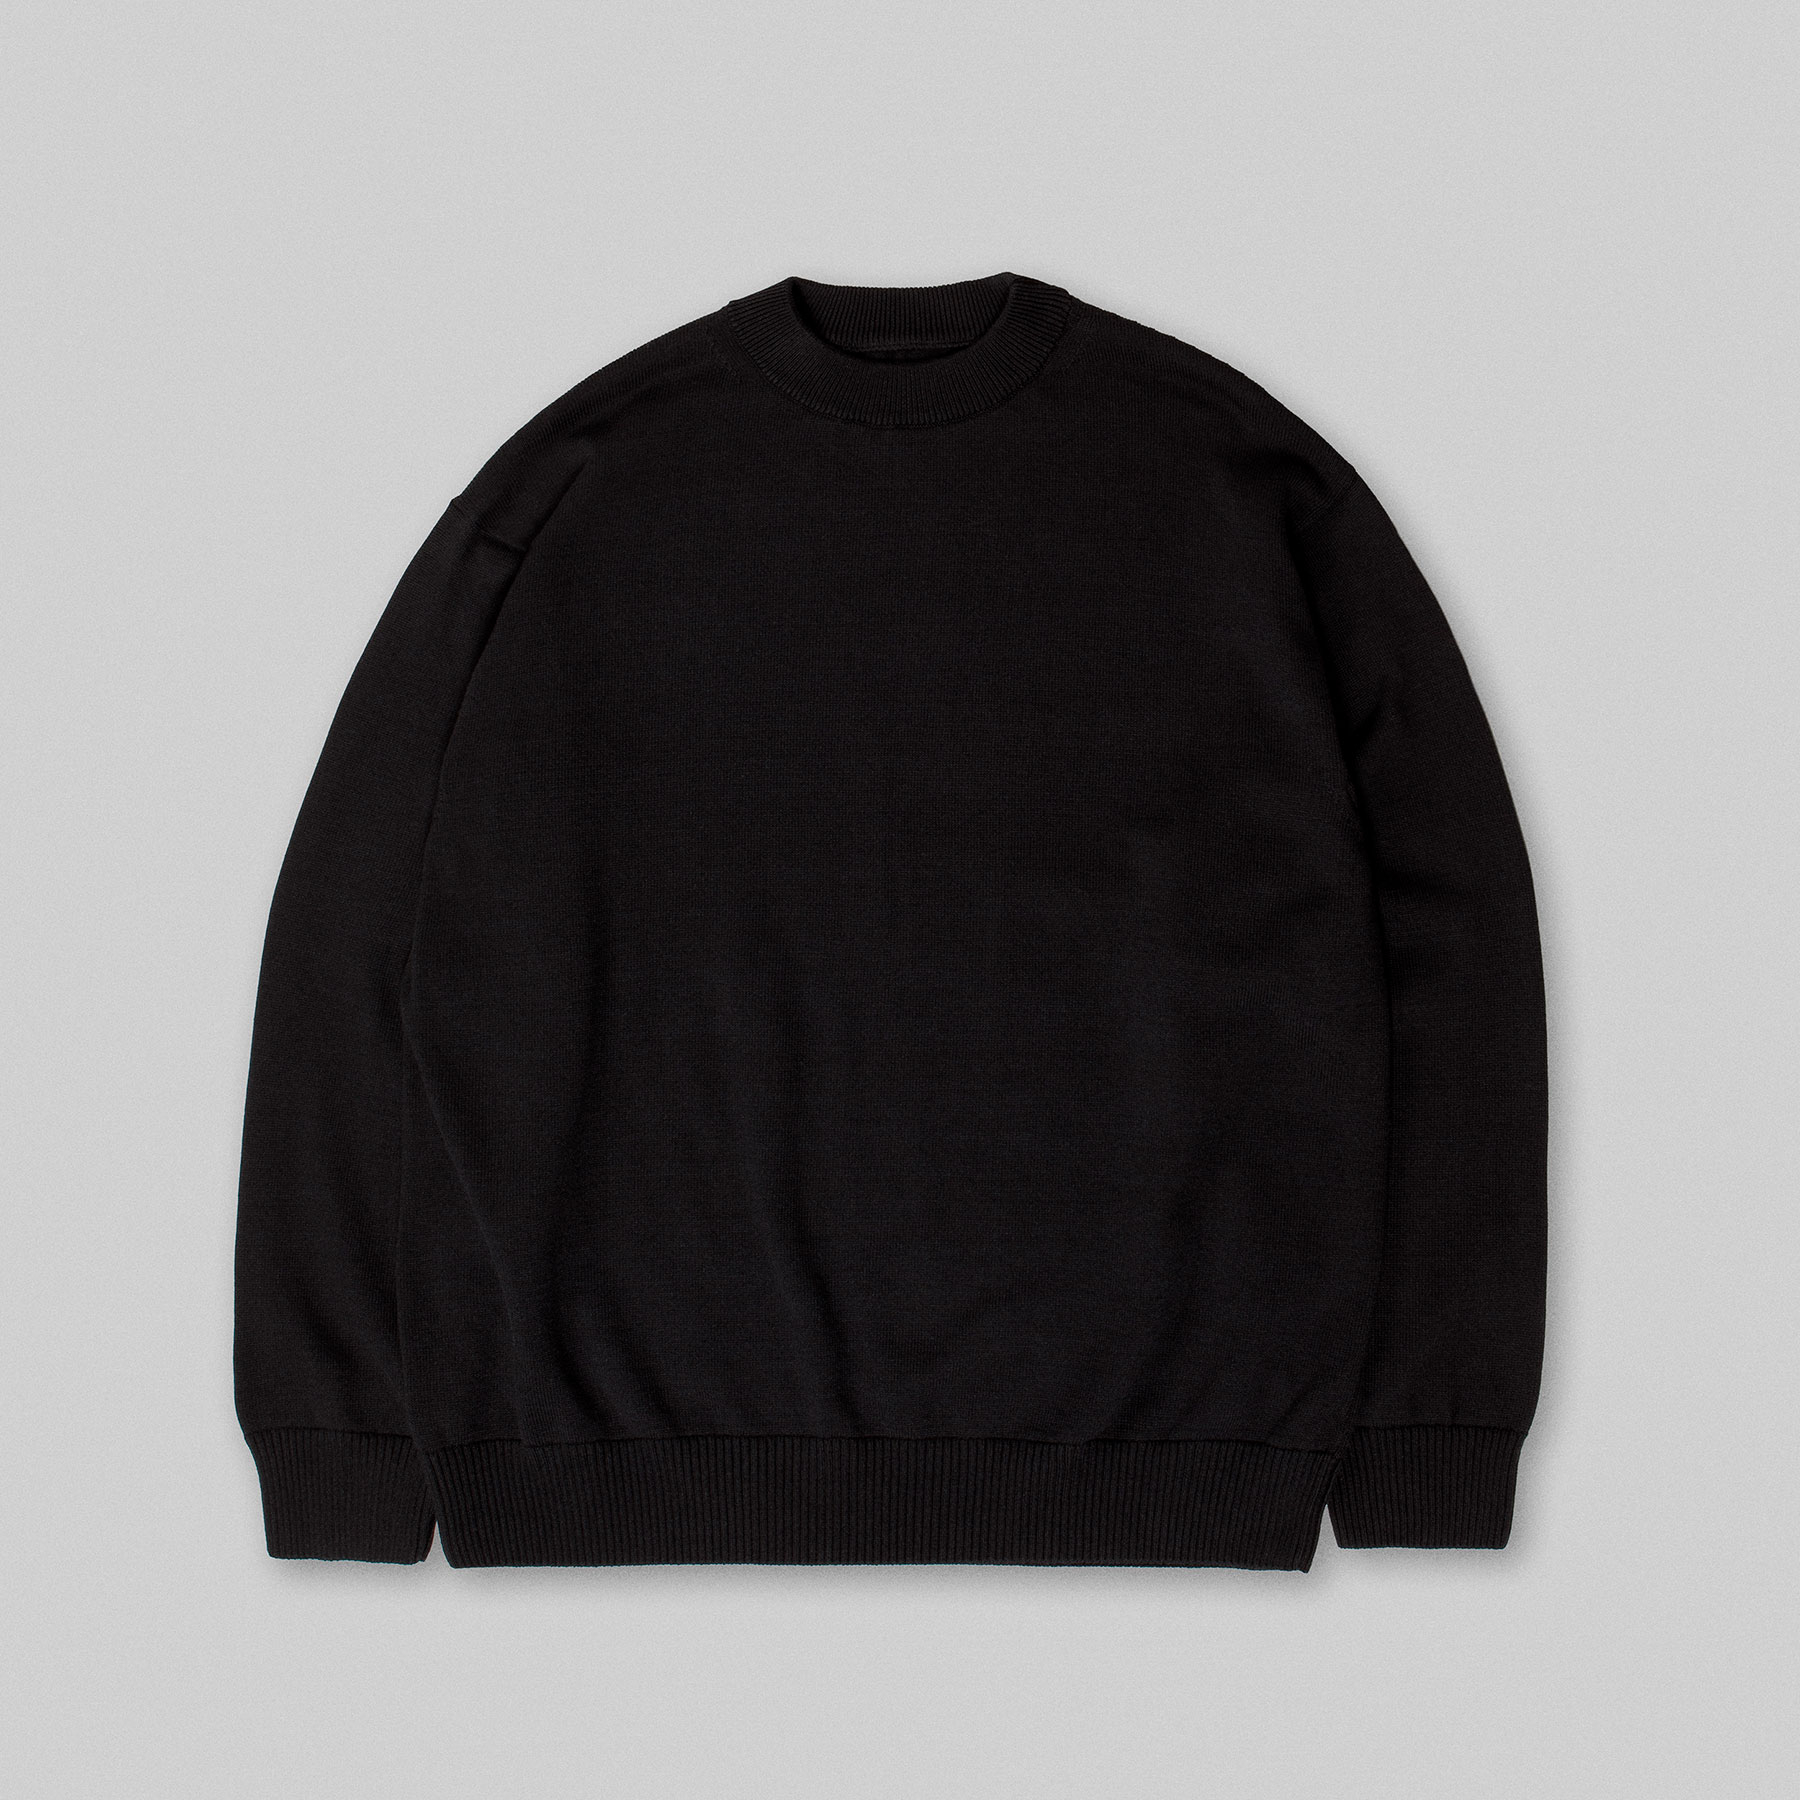 STANDARD sweater by Arpenteur in Black color